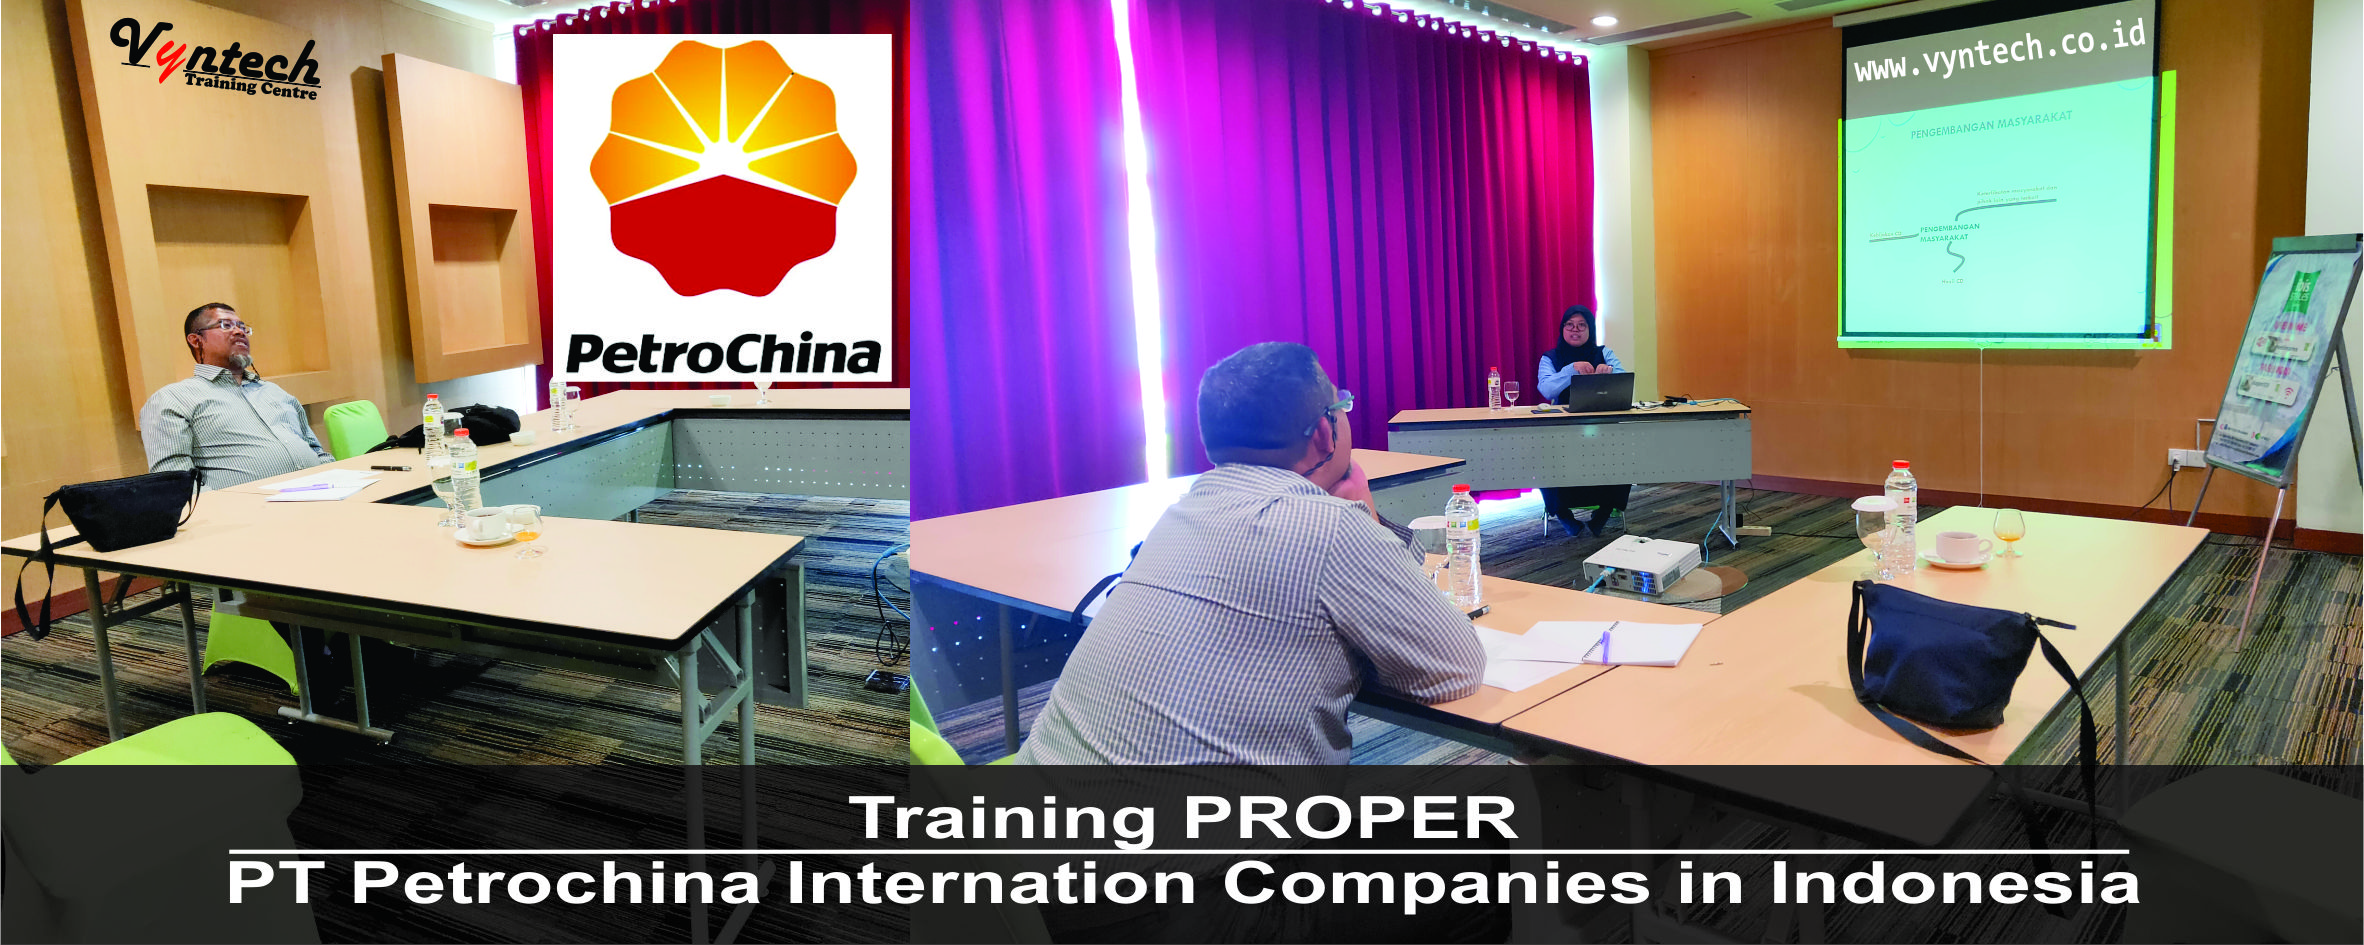 20191218 Training PROPER - PT Petrochina Internation Companies in Indonesia, di Yogya